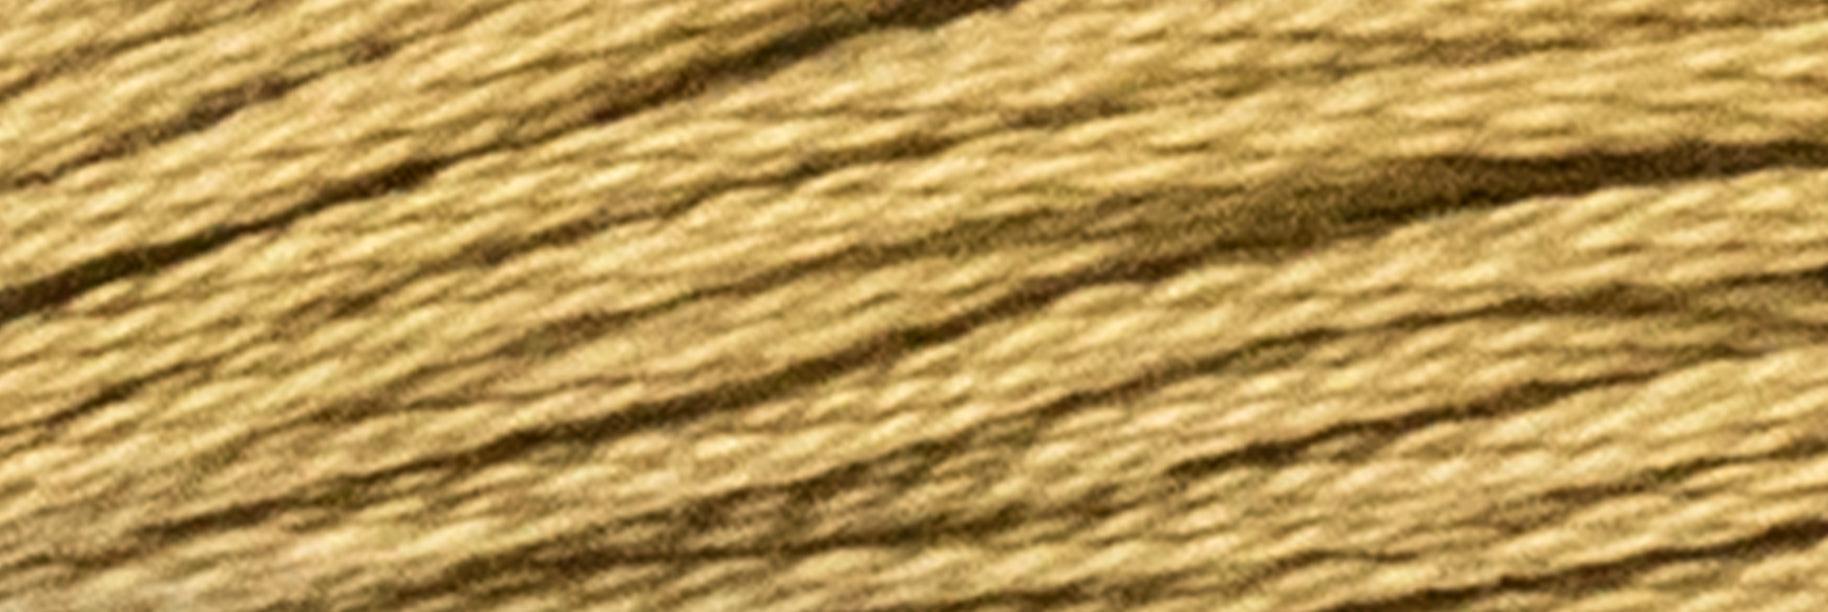 Stranded Cotton Luca-S - 337 / DMC 3045 / Anchor 888 - Luca-S Stranded Cotton